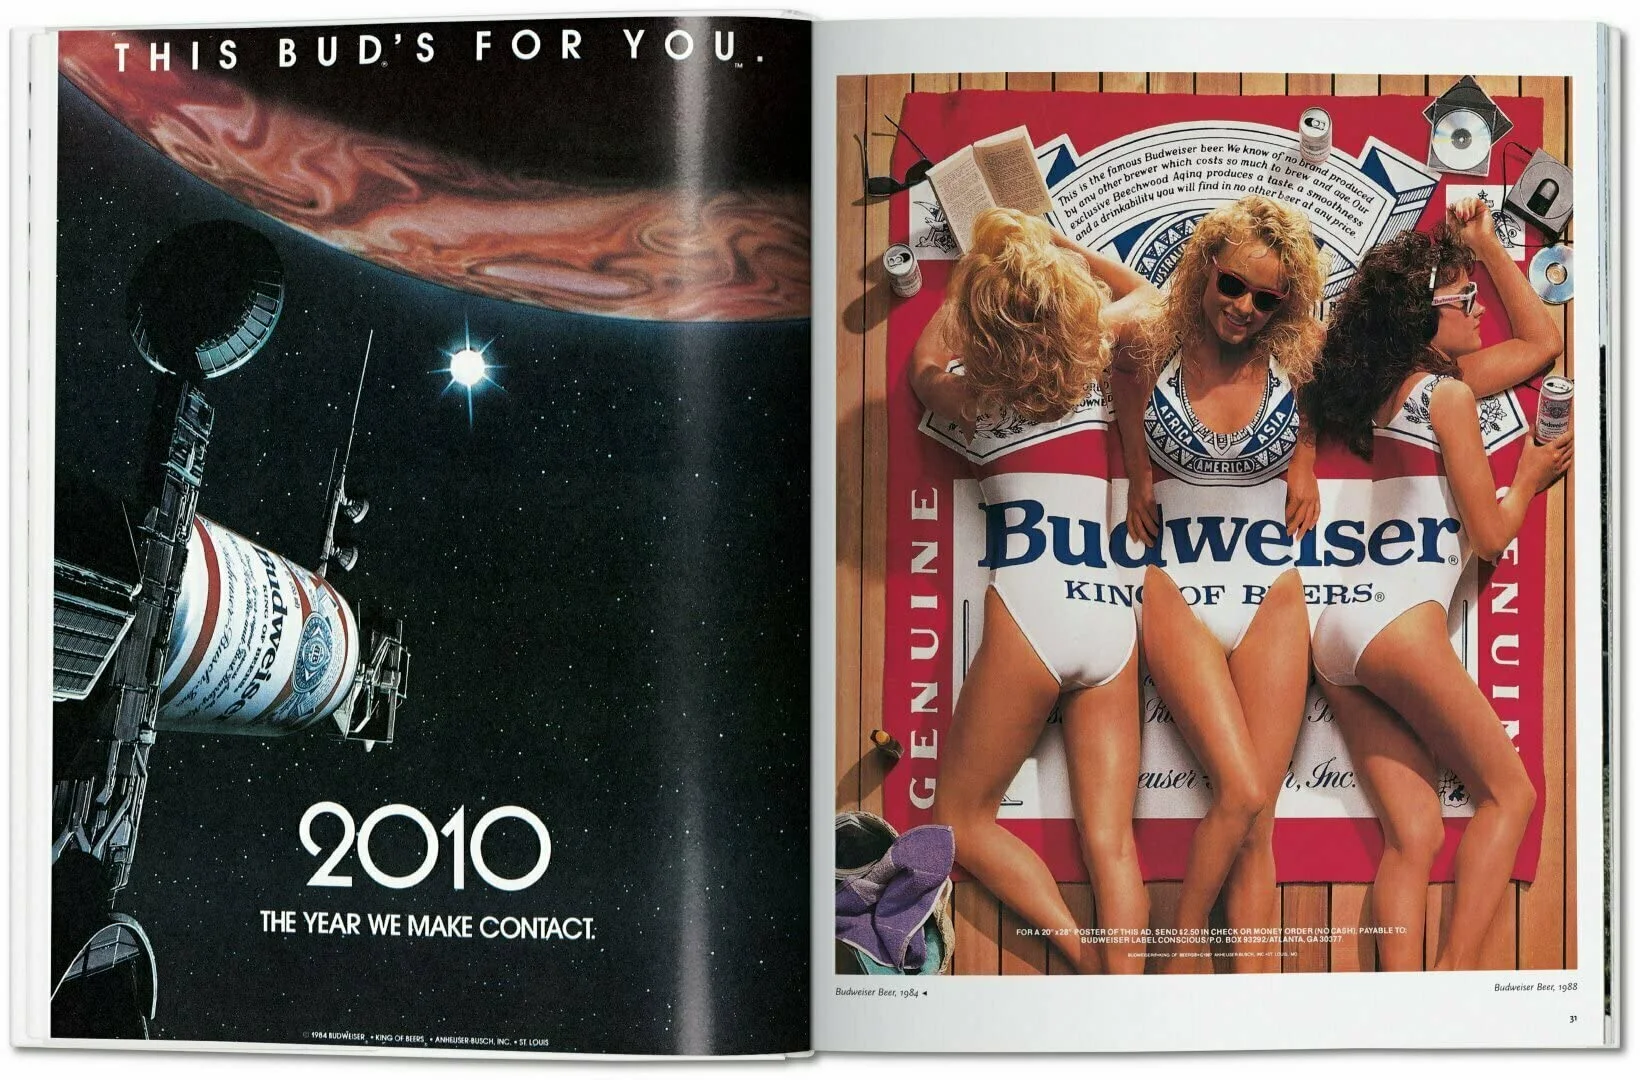 "All-American ADS of the 80s" "Вся американская реклама 80-х"